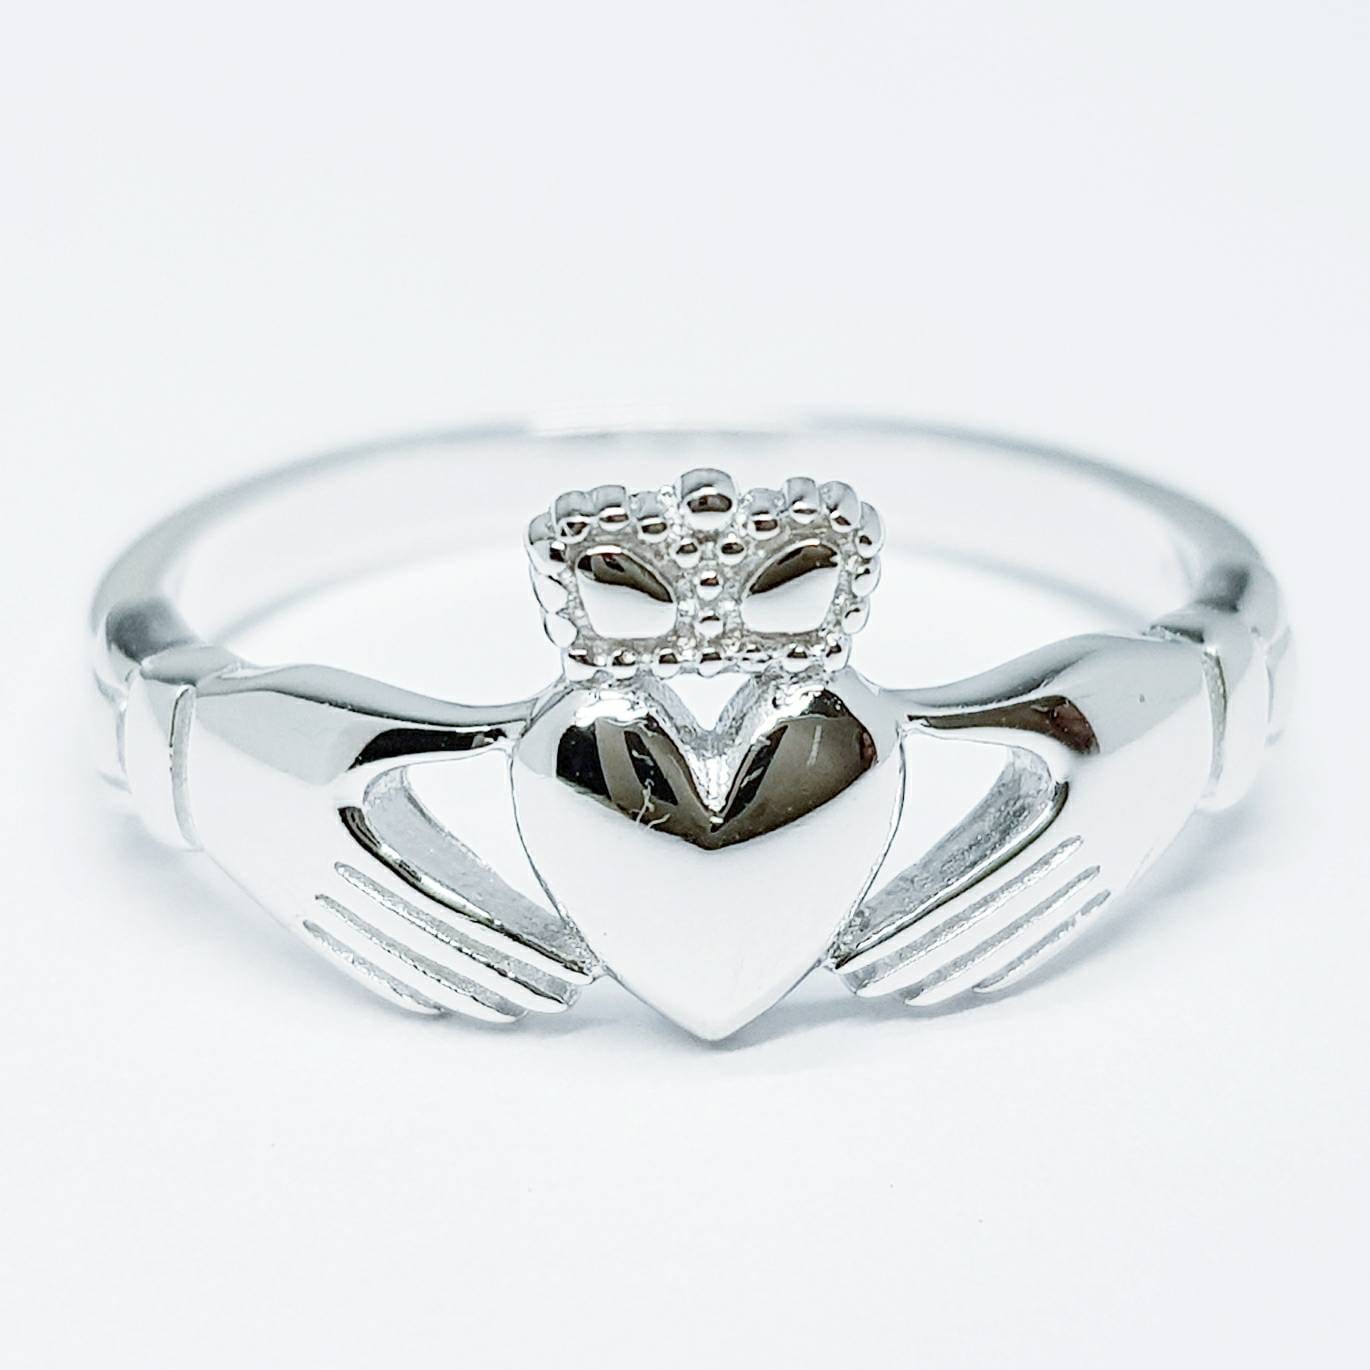 Small silver claddagh ring, Irish claddagh ring, delicate claddagh ring